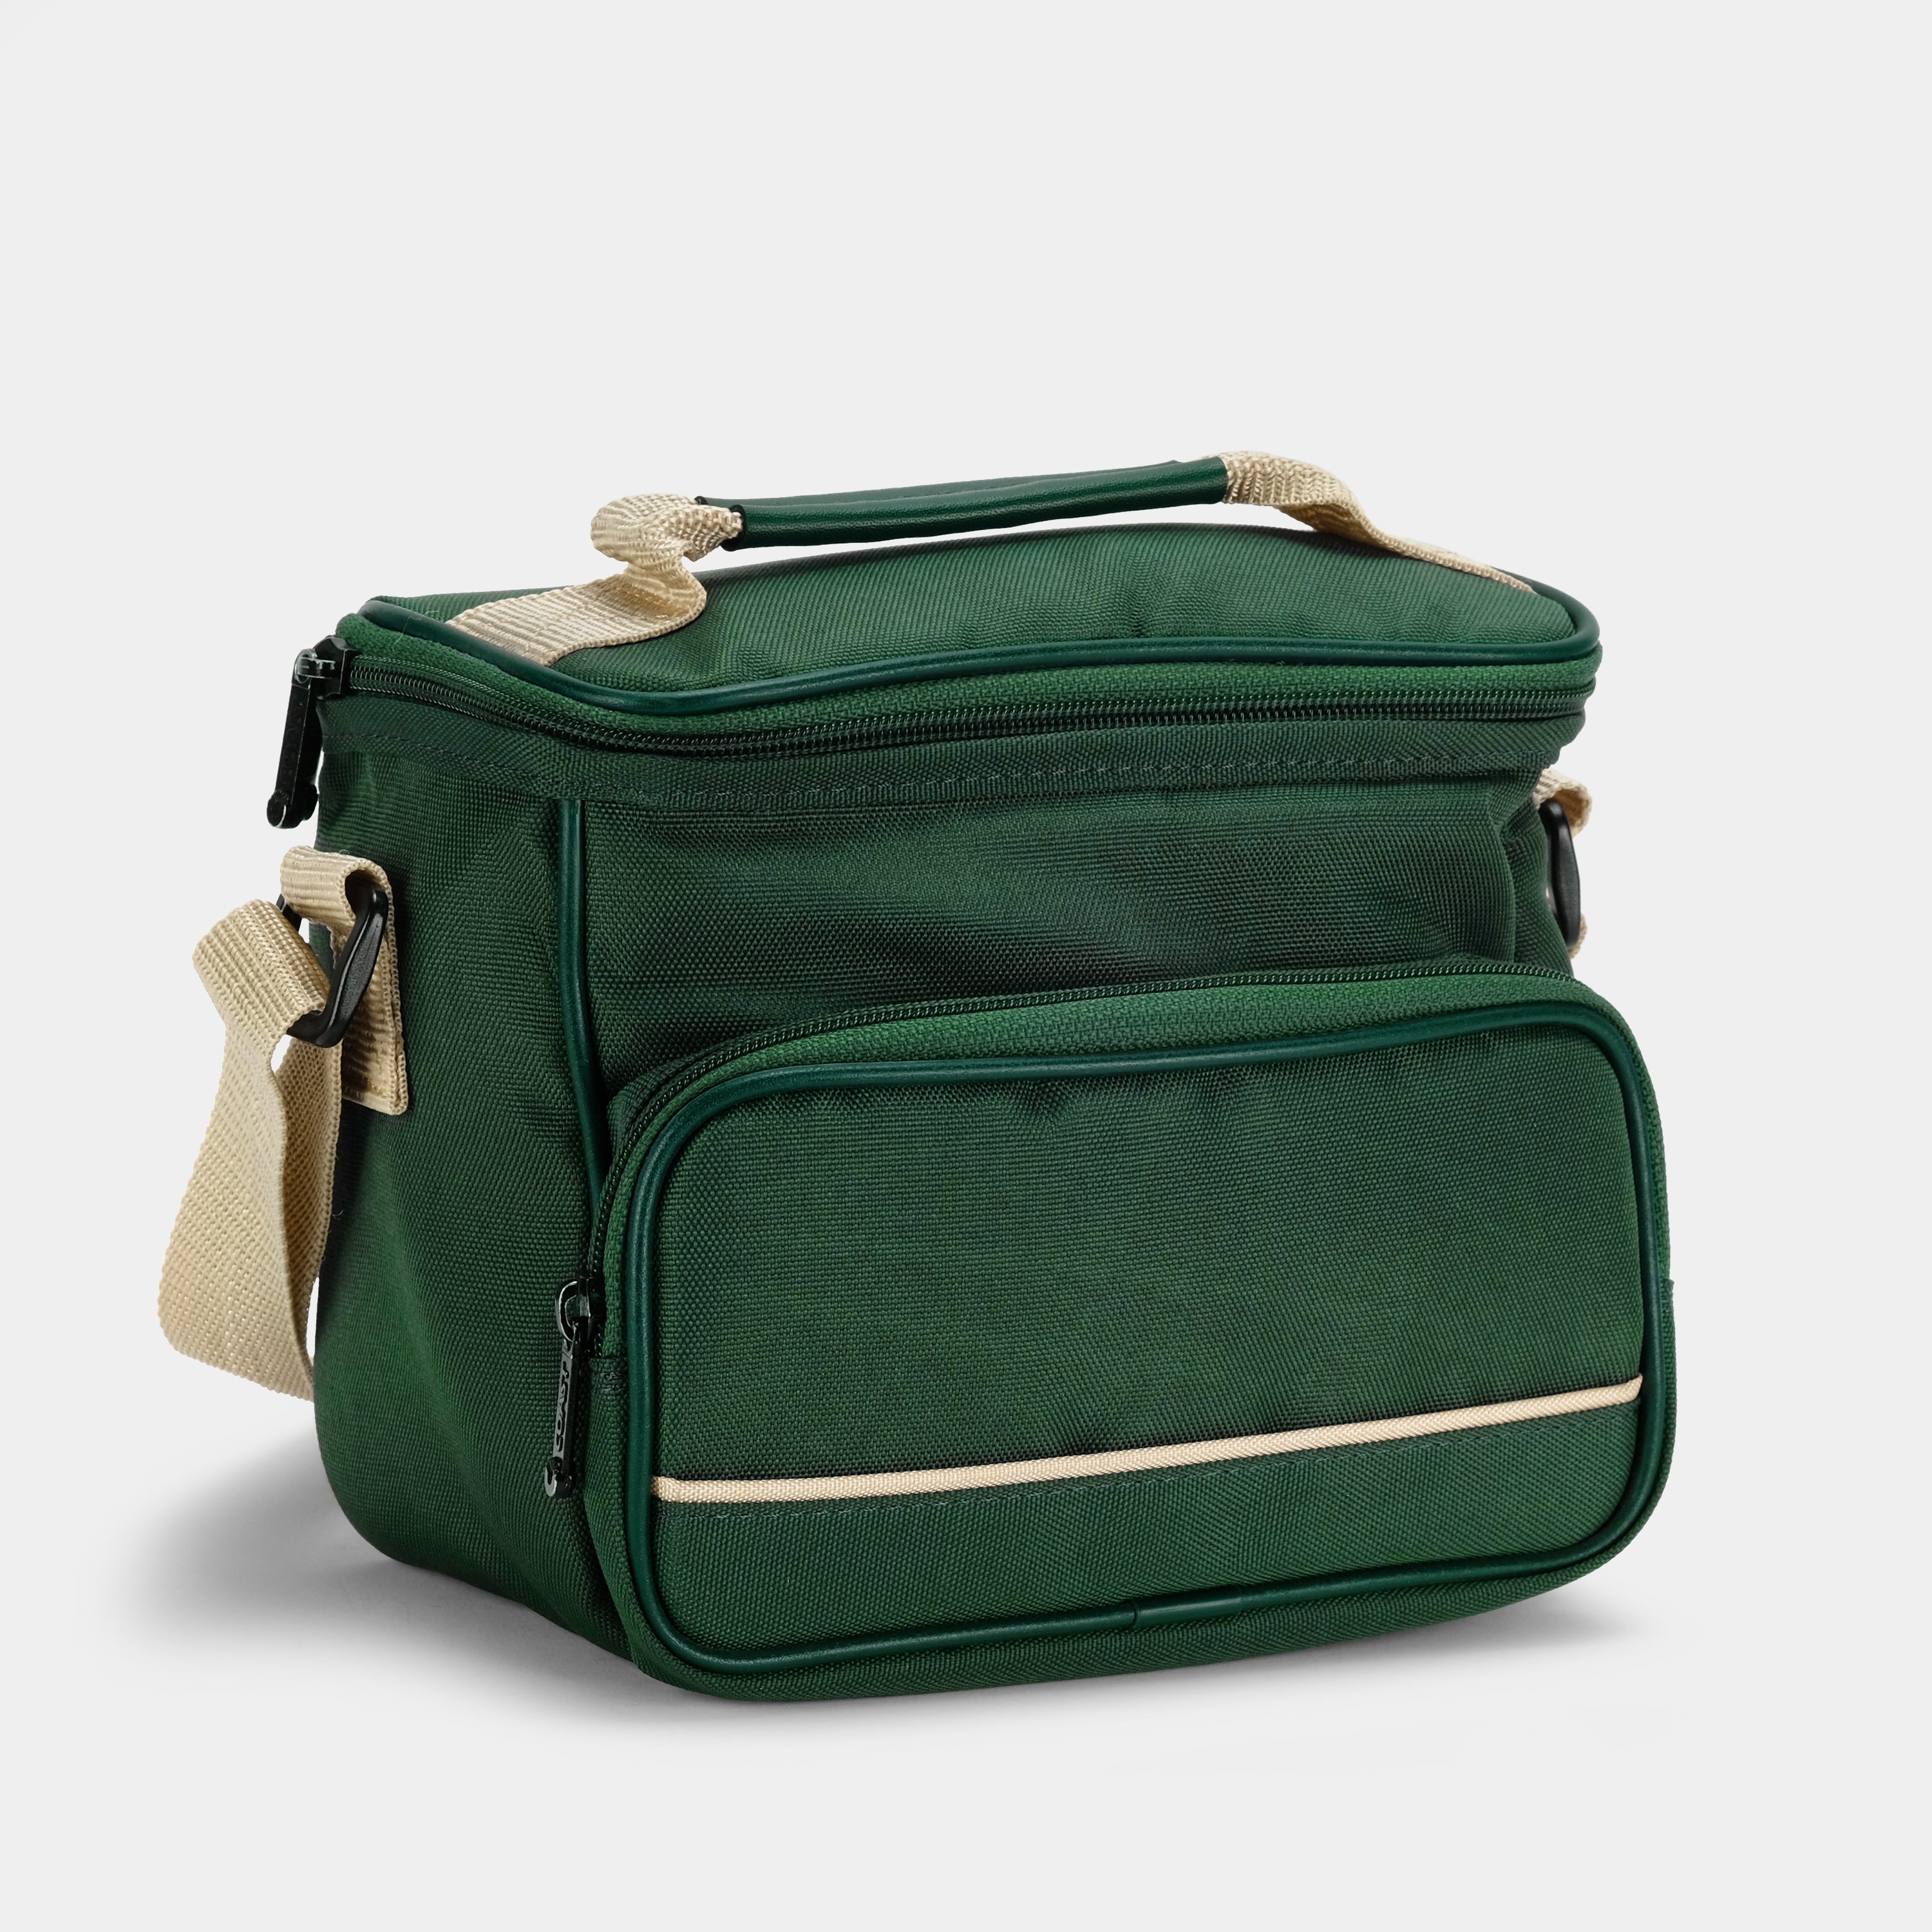 Green and Beige Camera Bag